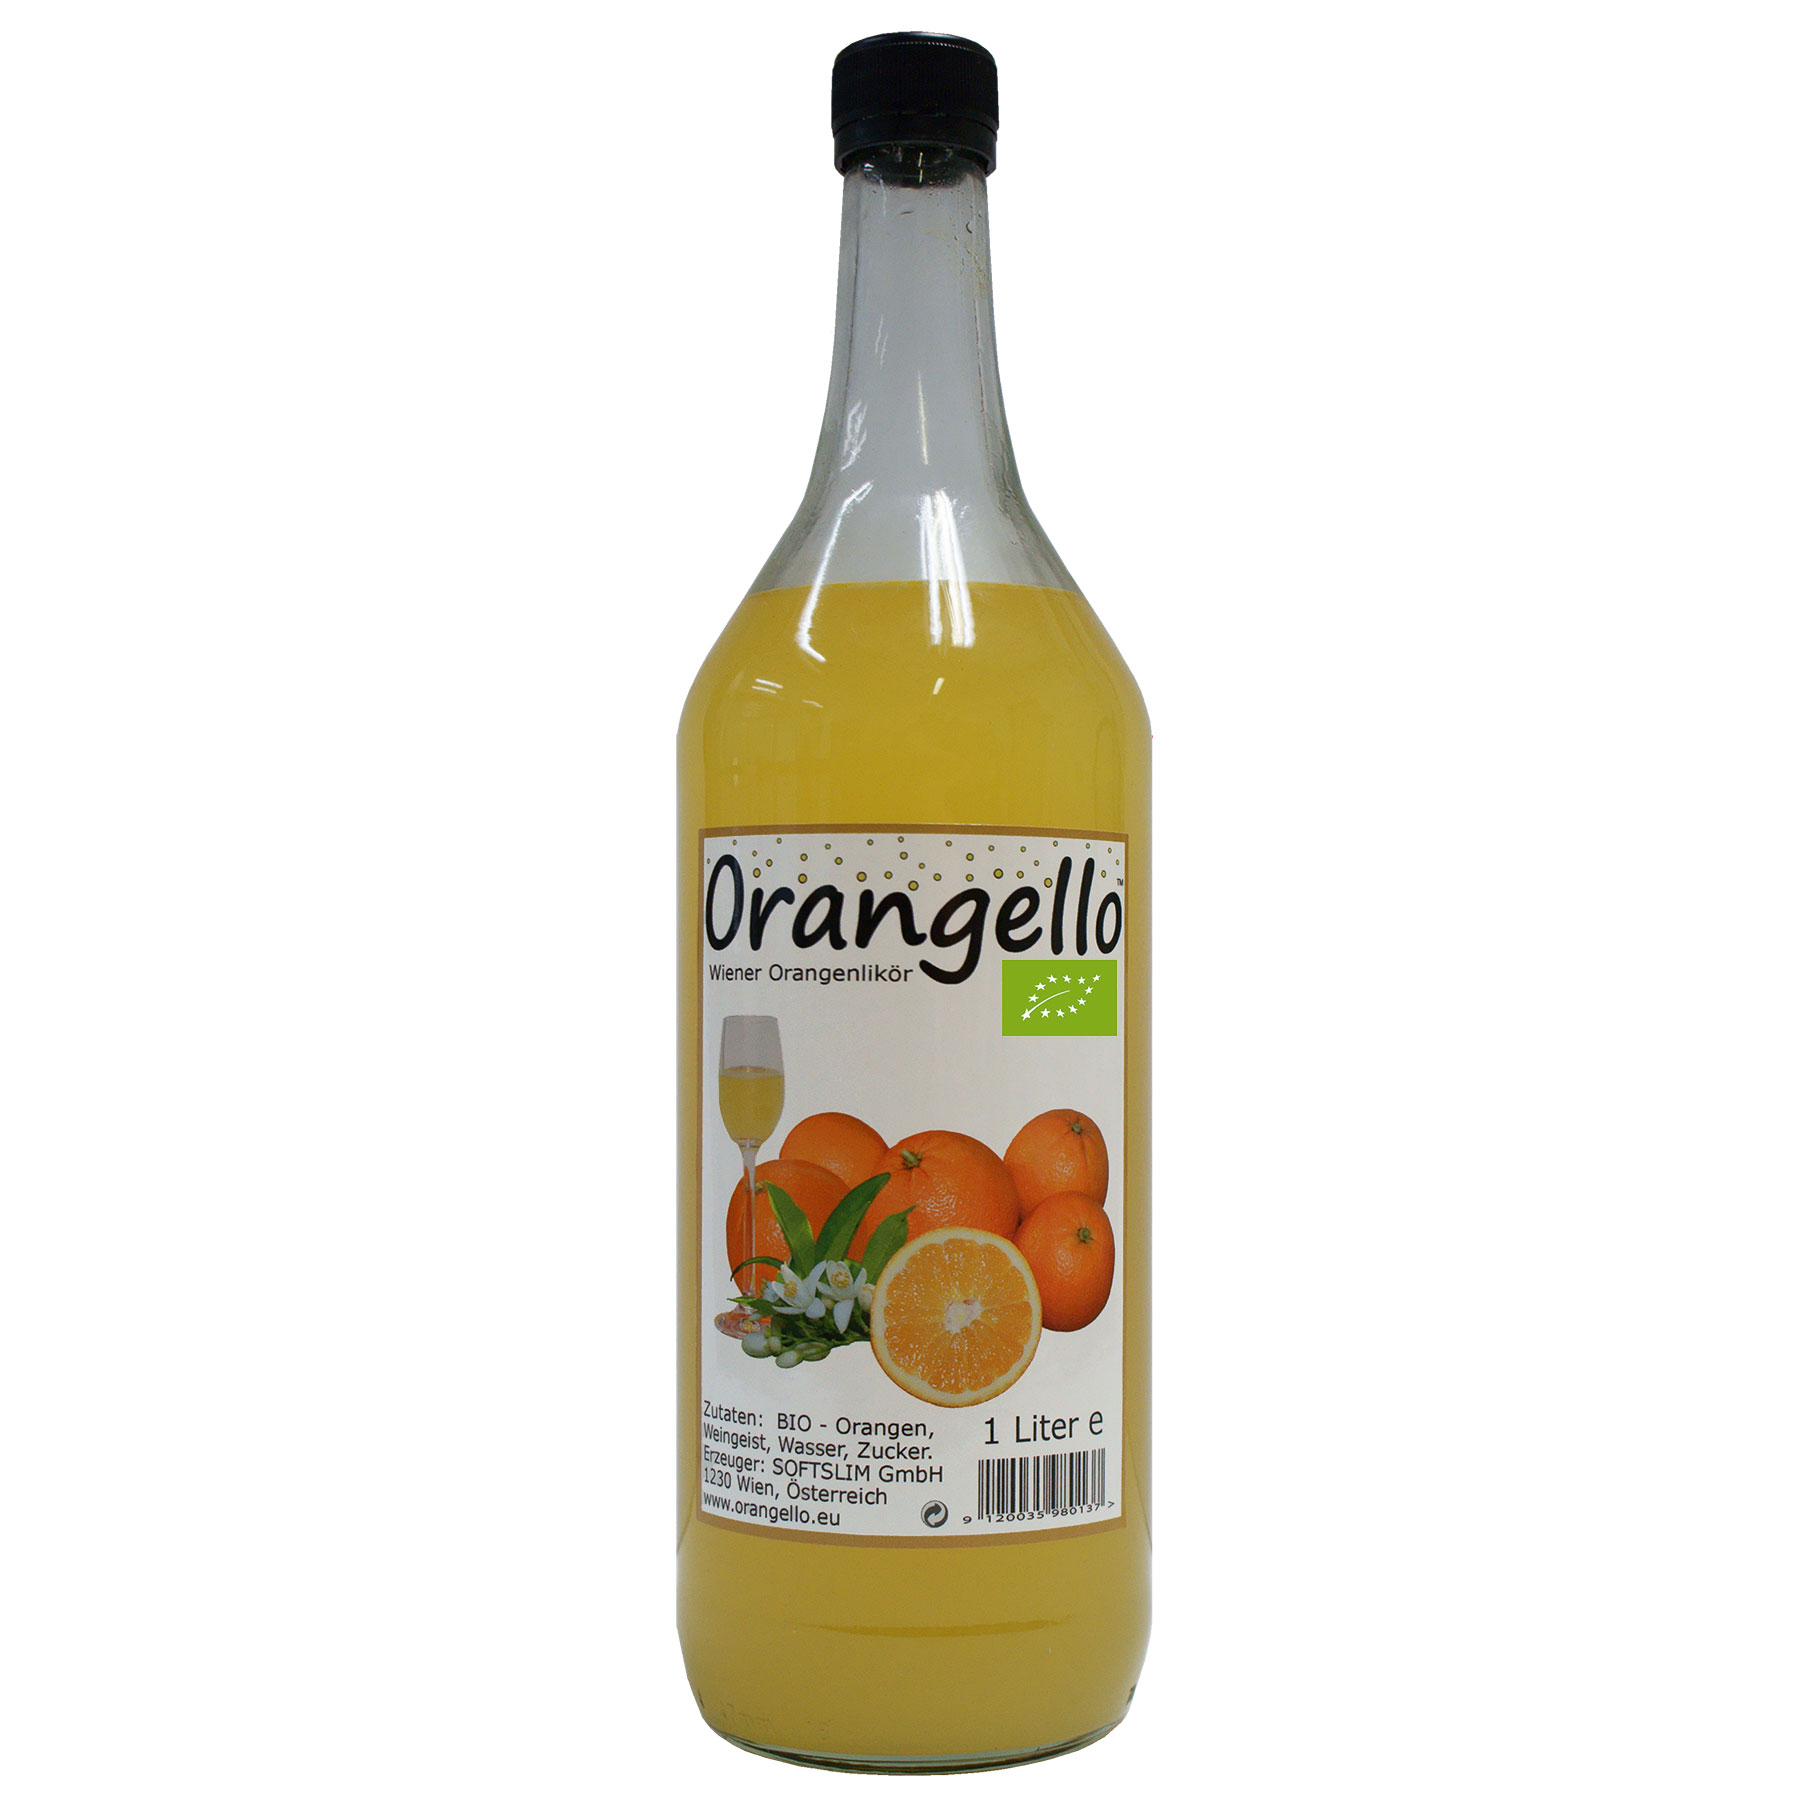 1 Liter Bio-Orangello – Orangello